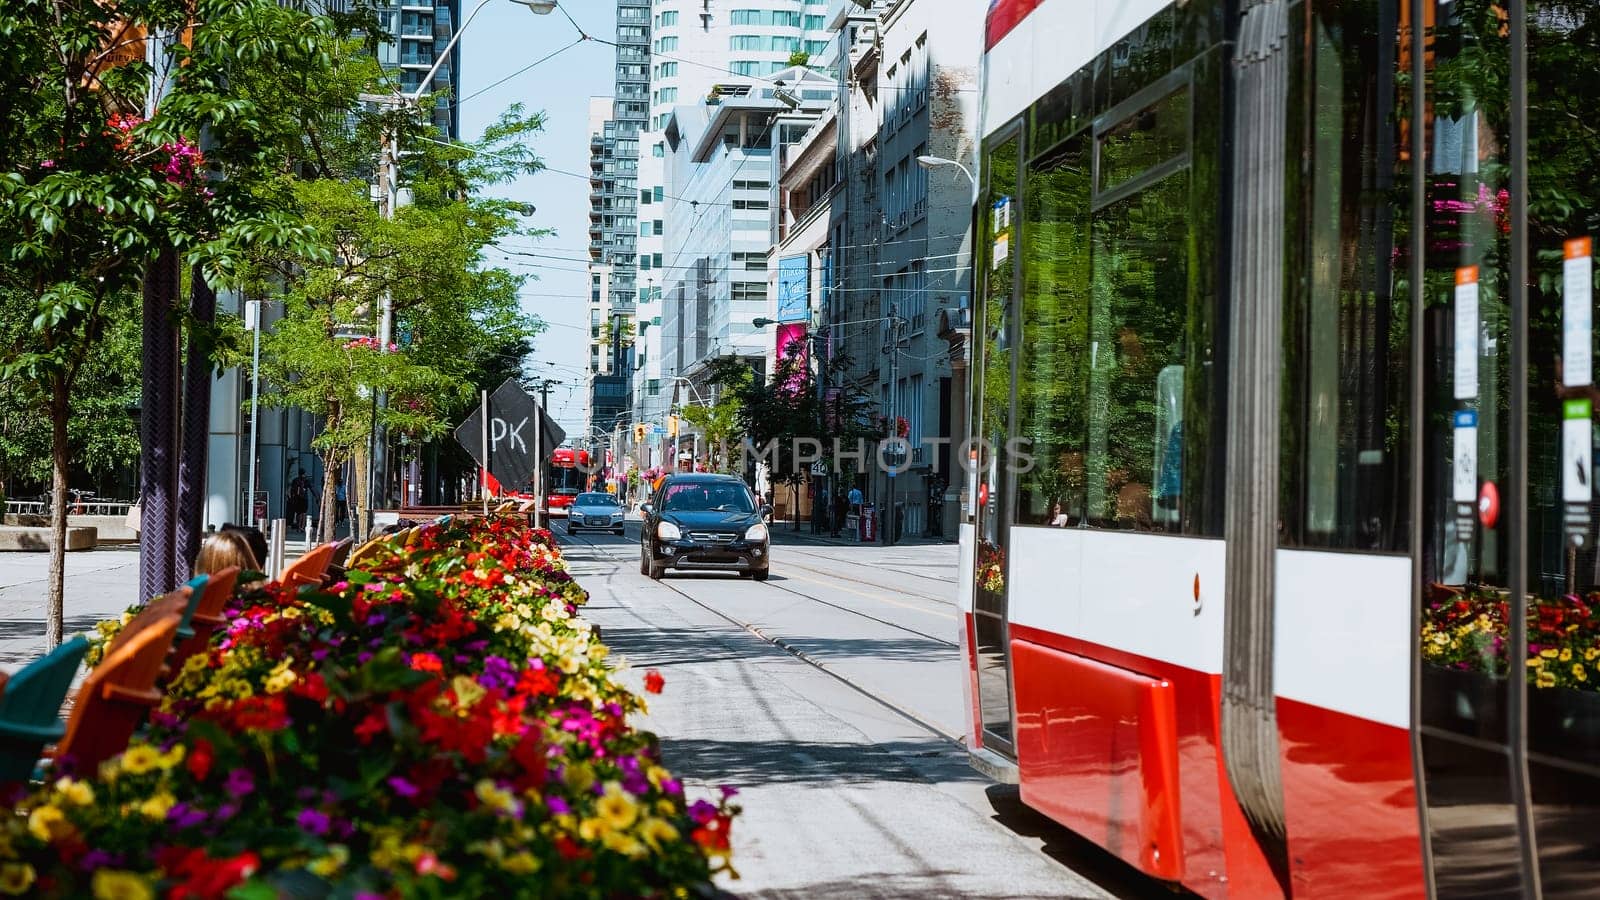 Street view of new Bombardier-made TTC streetcar on King street in Toronto. New Toronto Transit Commission tram on streets of Toronto. Toronto, Canada - 04 09 2022.